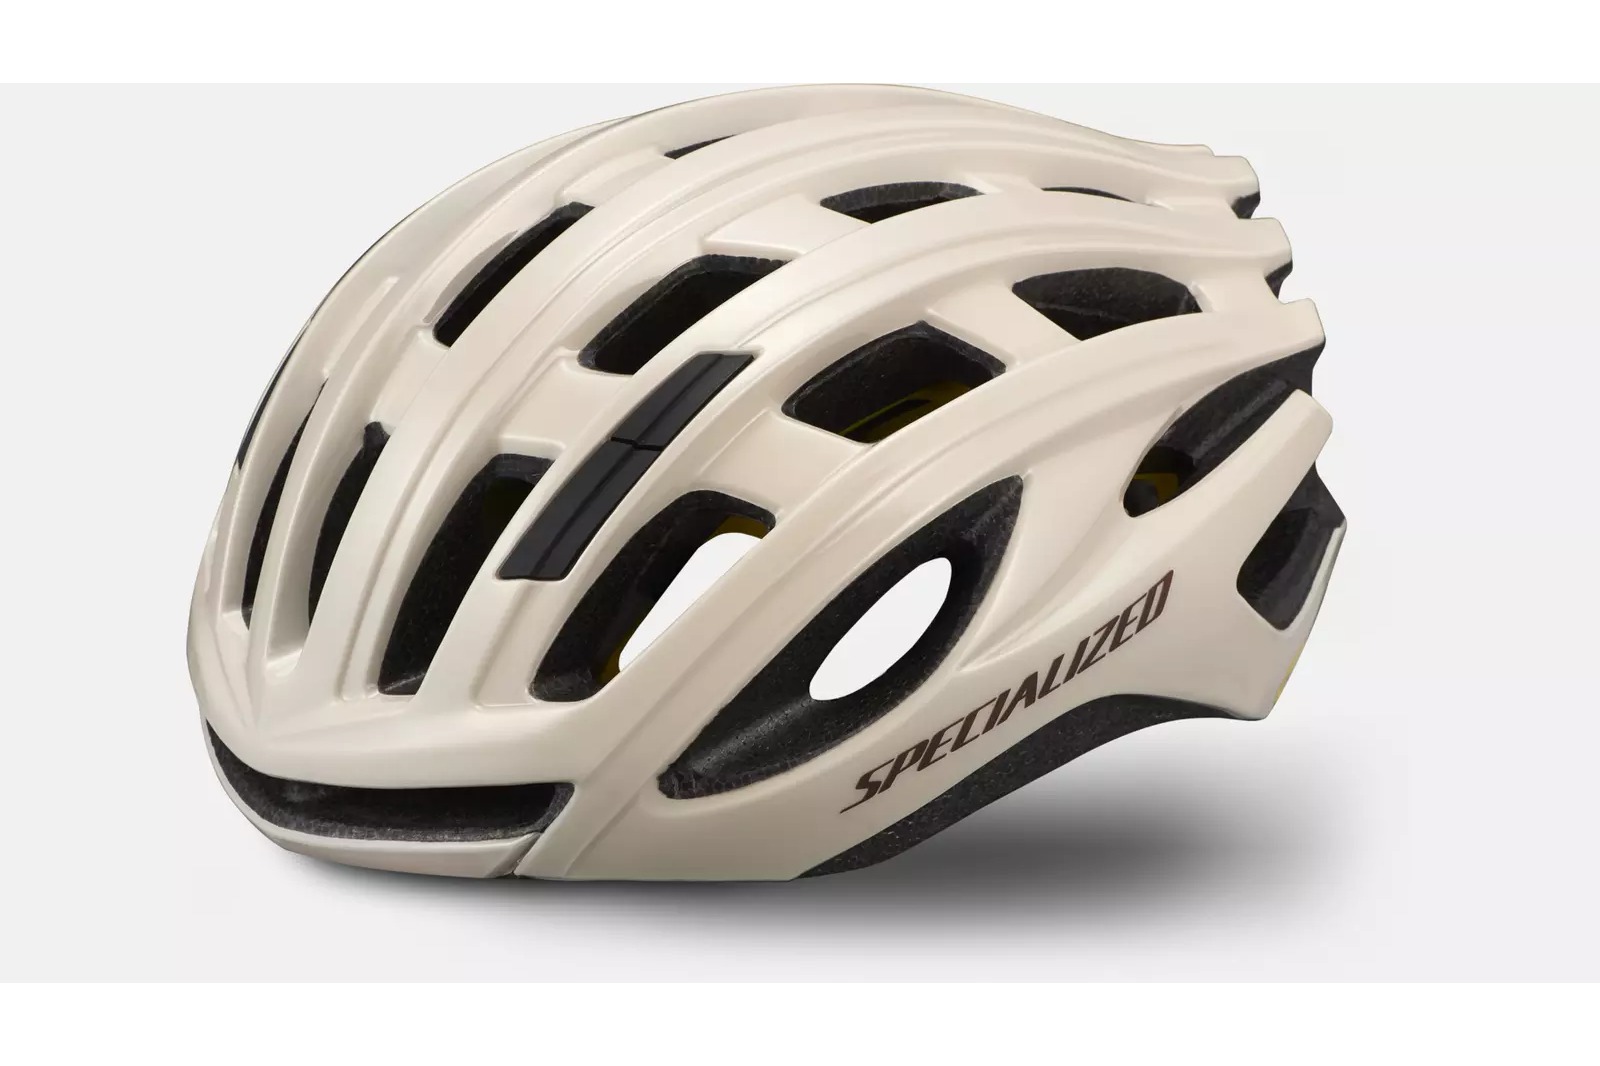 Specialized Propero 3 ANGI MIPS Helmet